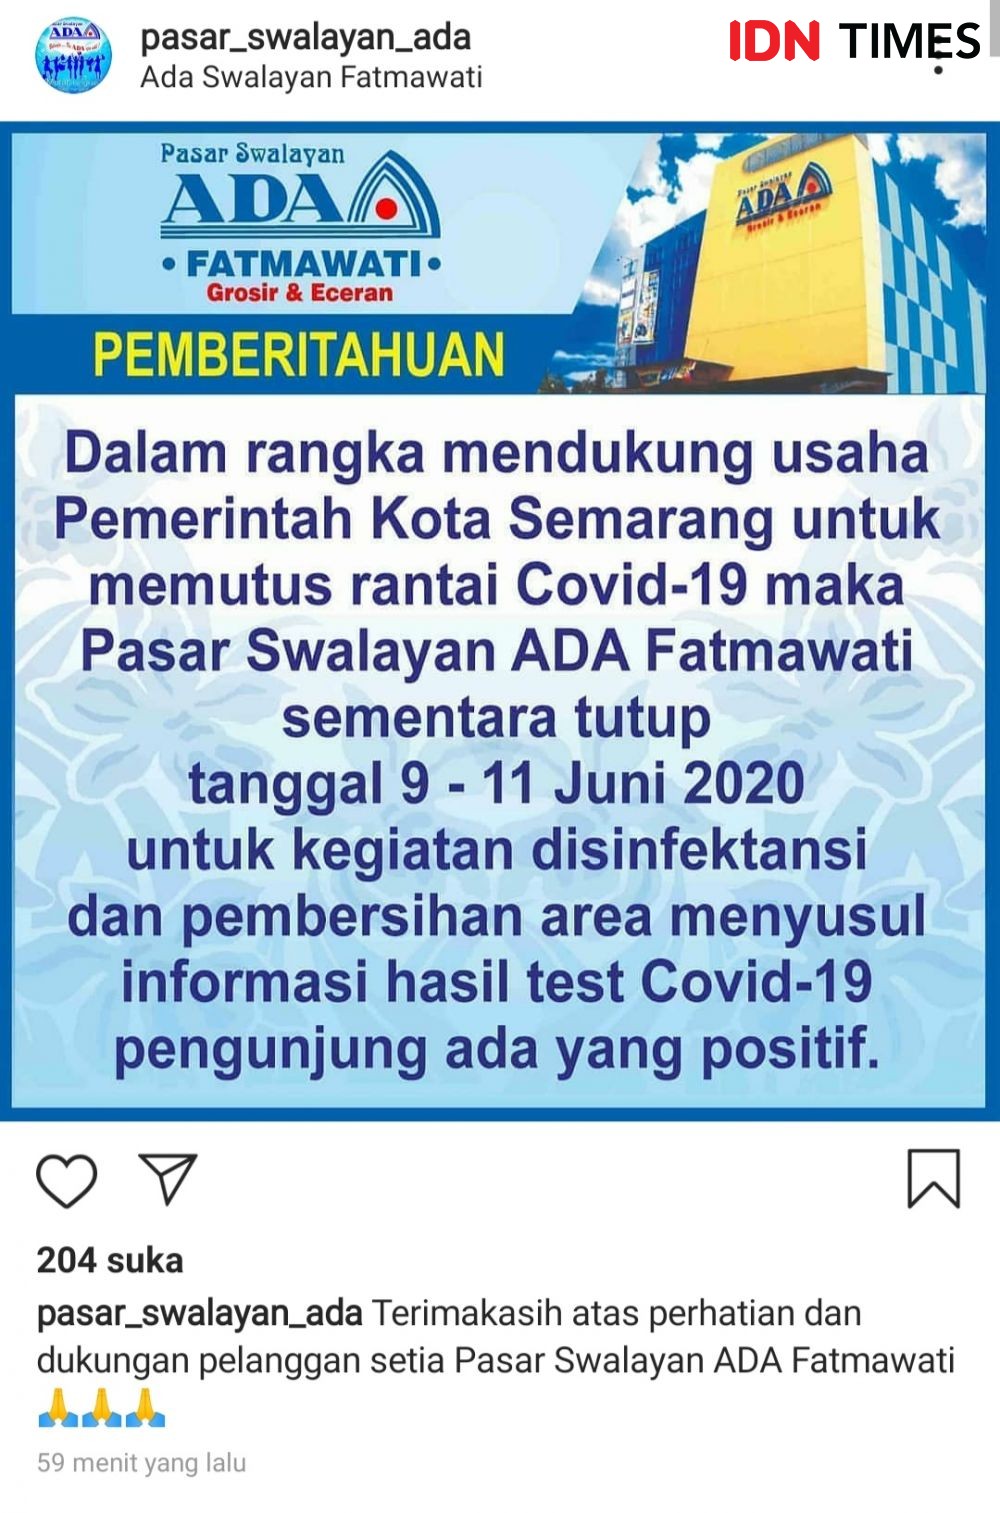 Swalayan ADA Fatmawati Jadi Klaster Baru COVID-19 di Semarang, Awas!